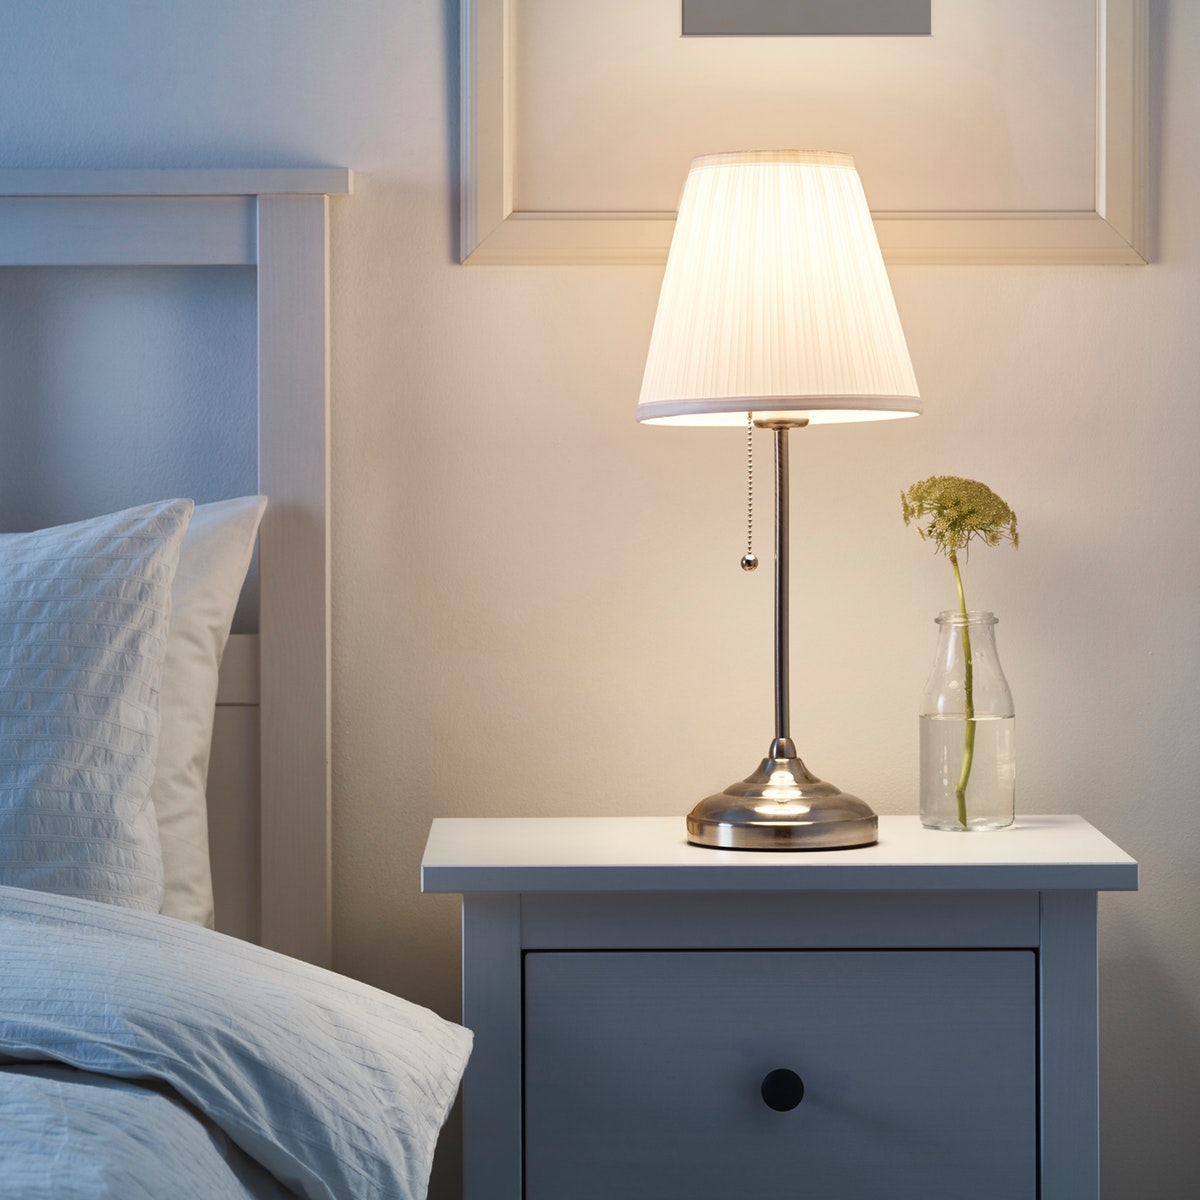 Bedroom Lighting, Floor Lamps and Table 